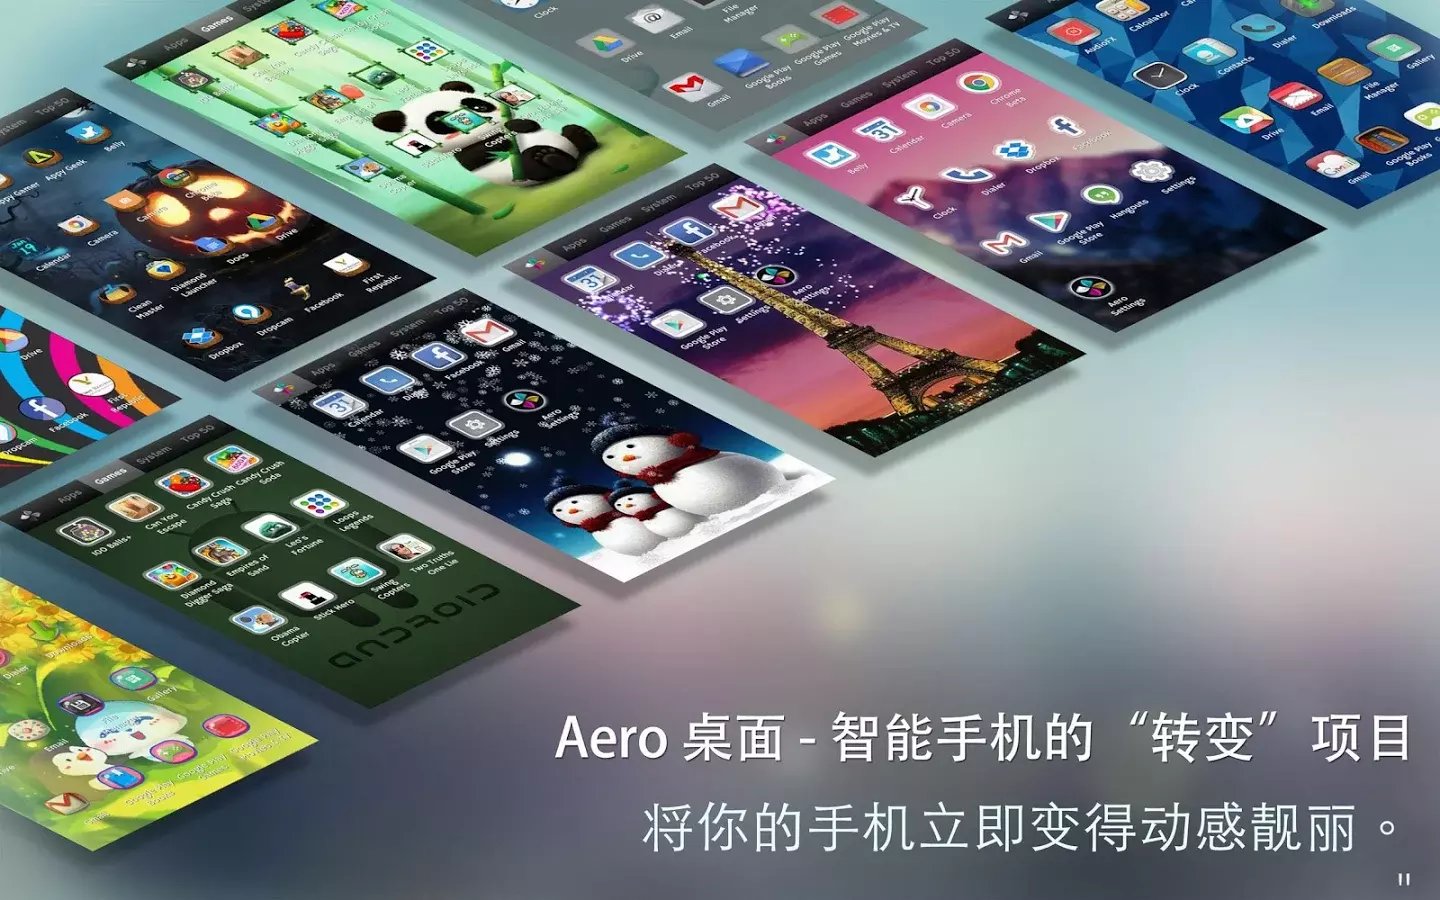 Aero 桌面 - 智能手机的“转变”项目截图1